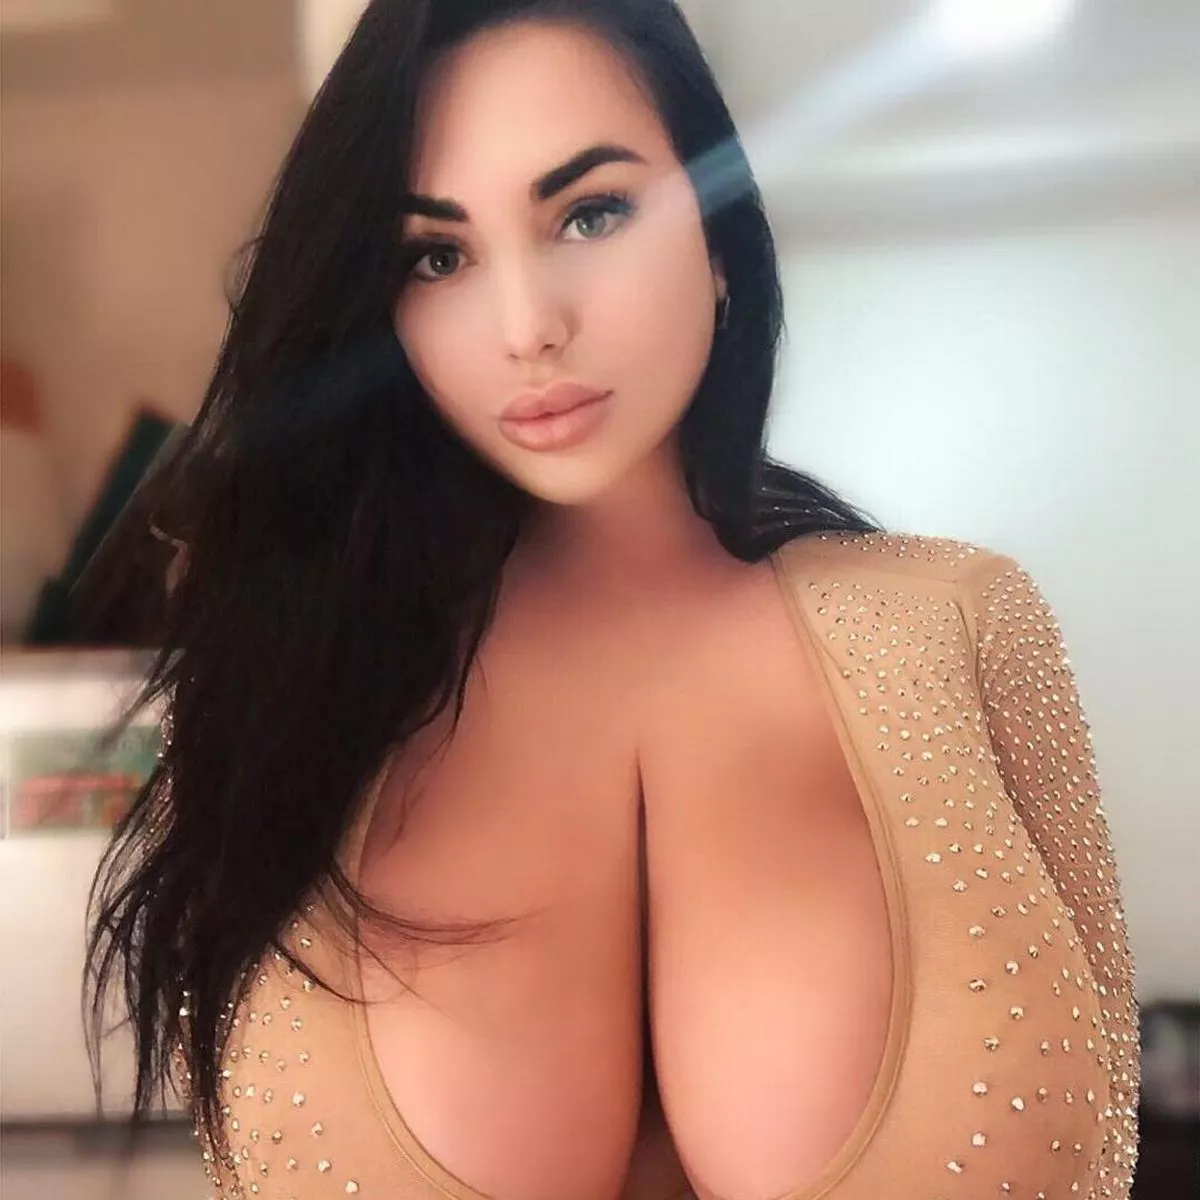 bujamin elmazi share big natural boobs webcam photos